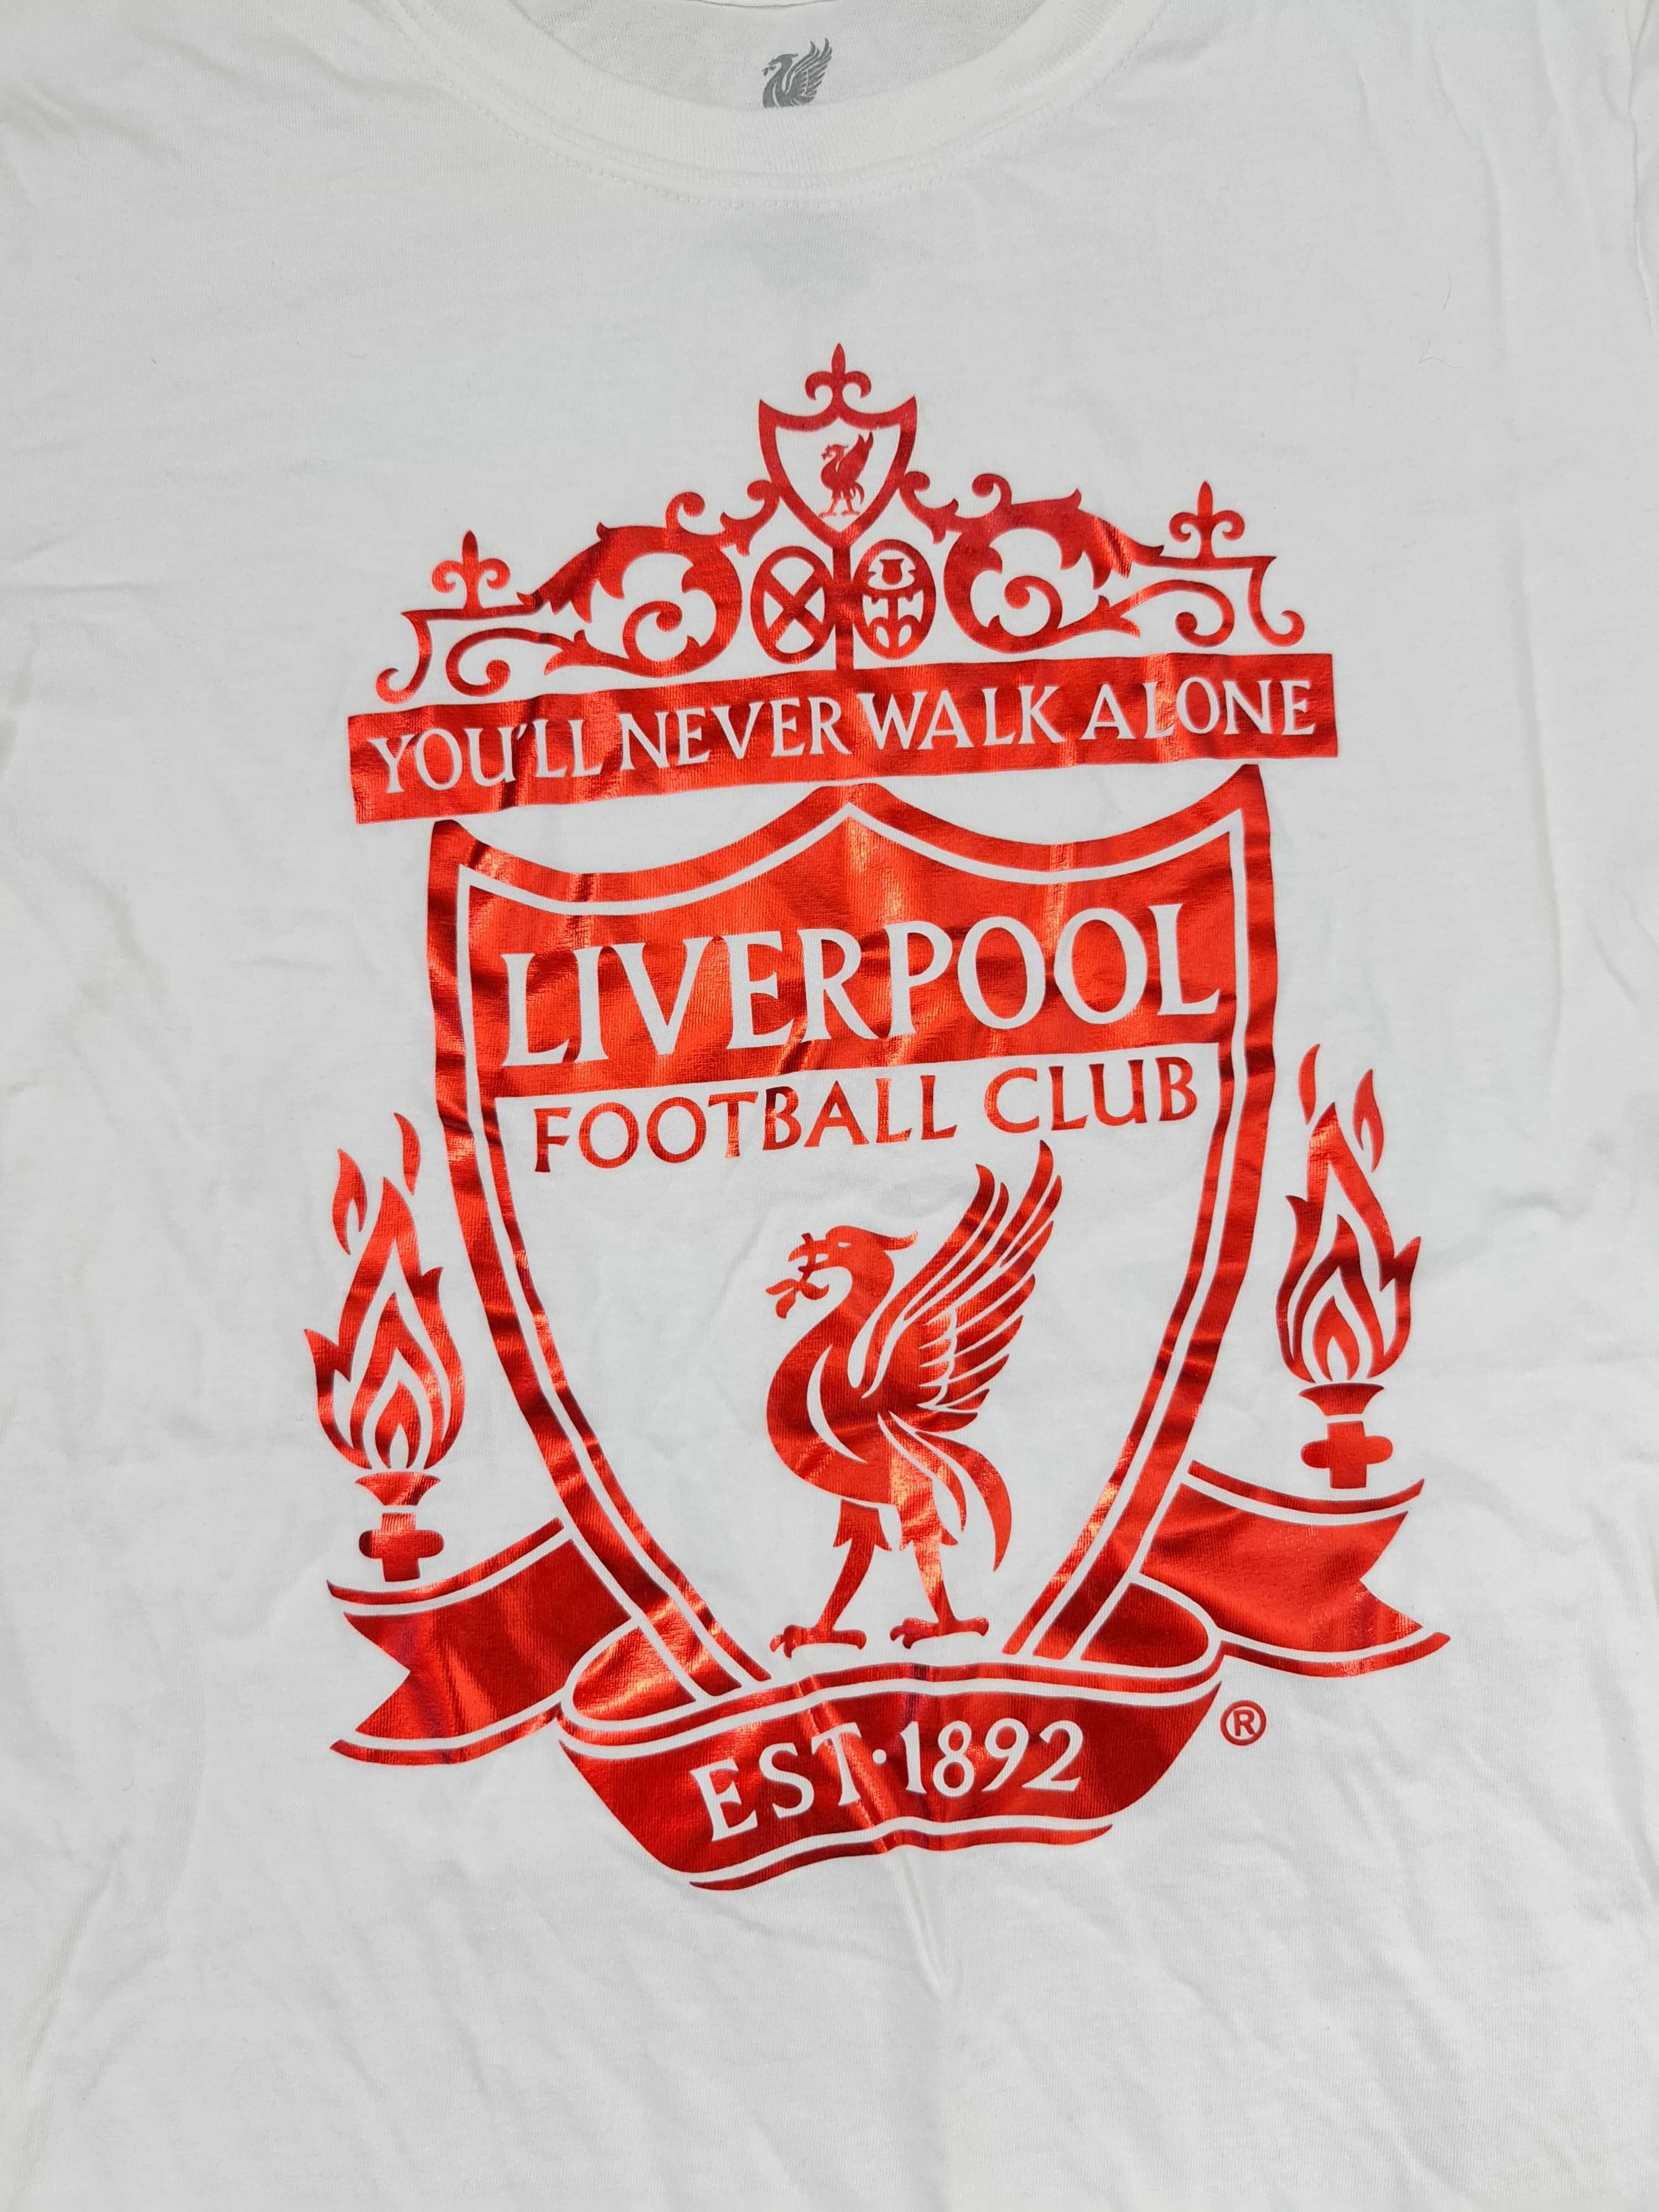 Koszulka T-shirt Liverpool L.F.C Rozmiar S / M Biała Logo Oficjalna